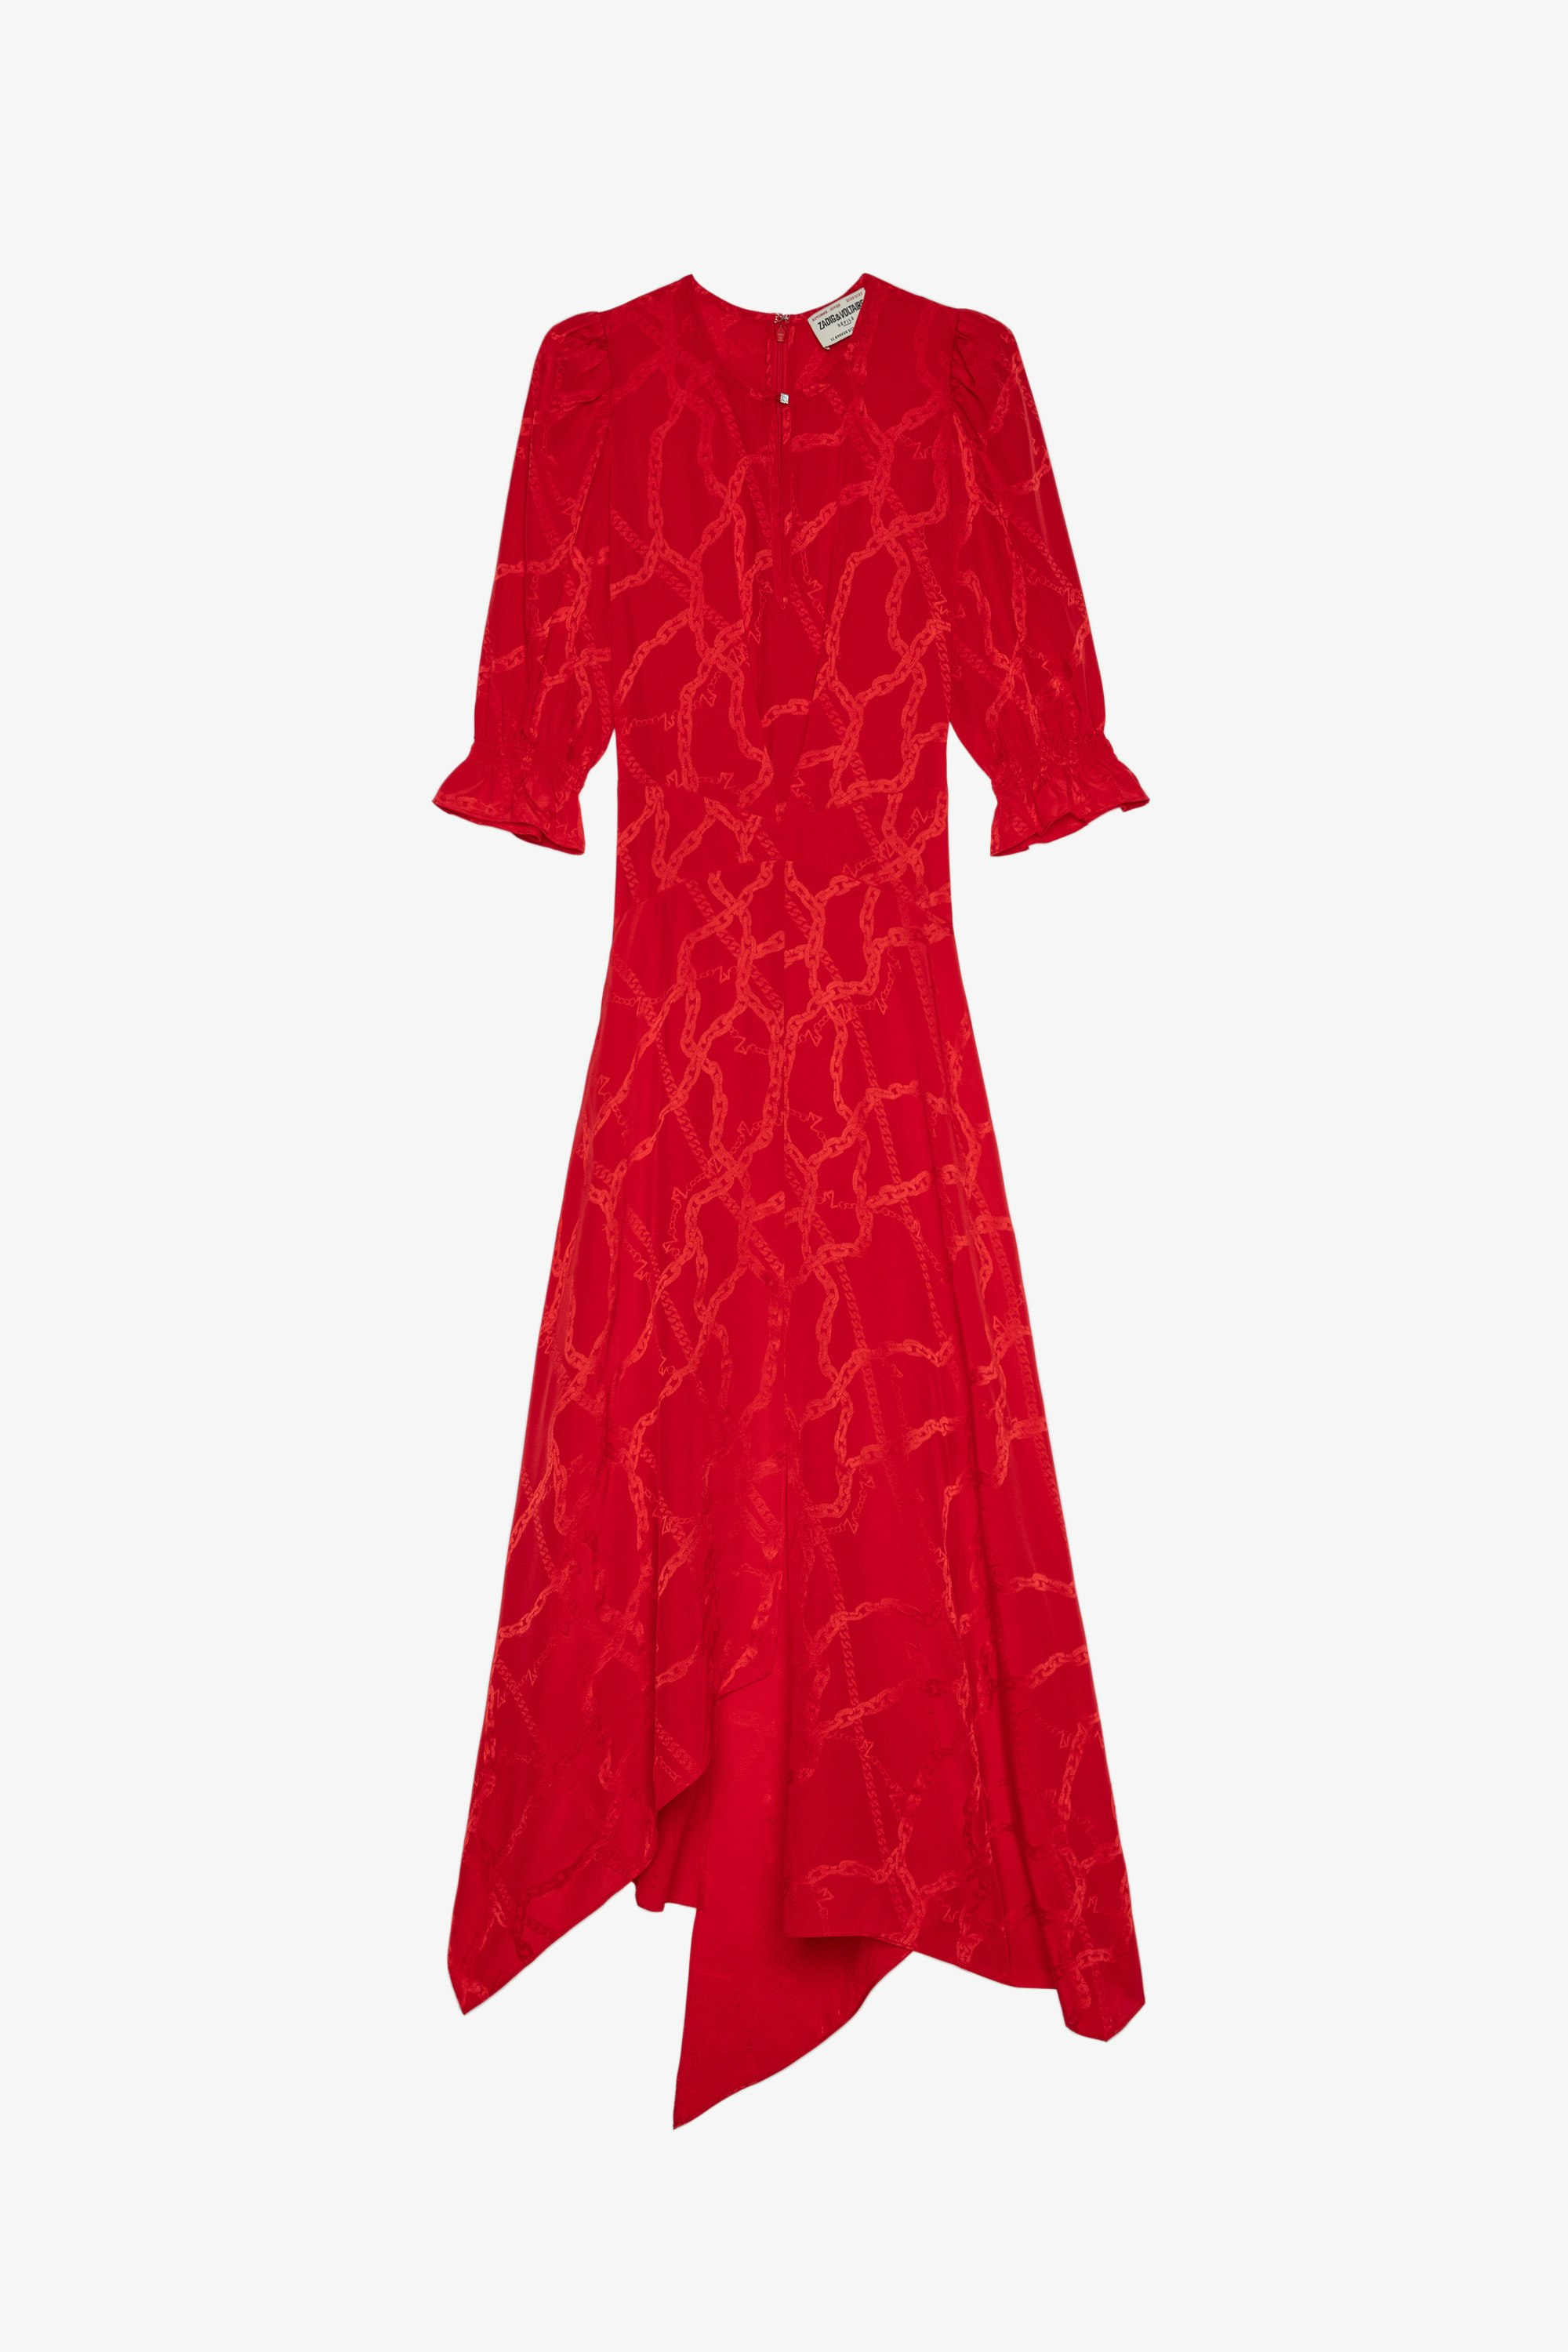 Ranage Jac Silk Dress Women’s draped orange silk jacquard dress with chain motifs